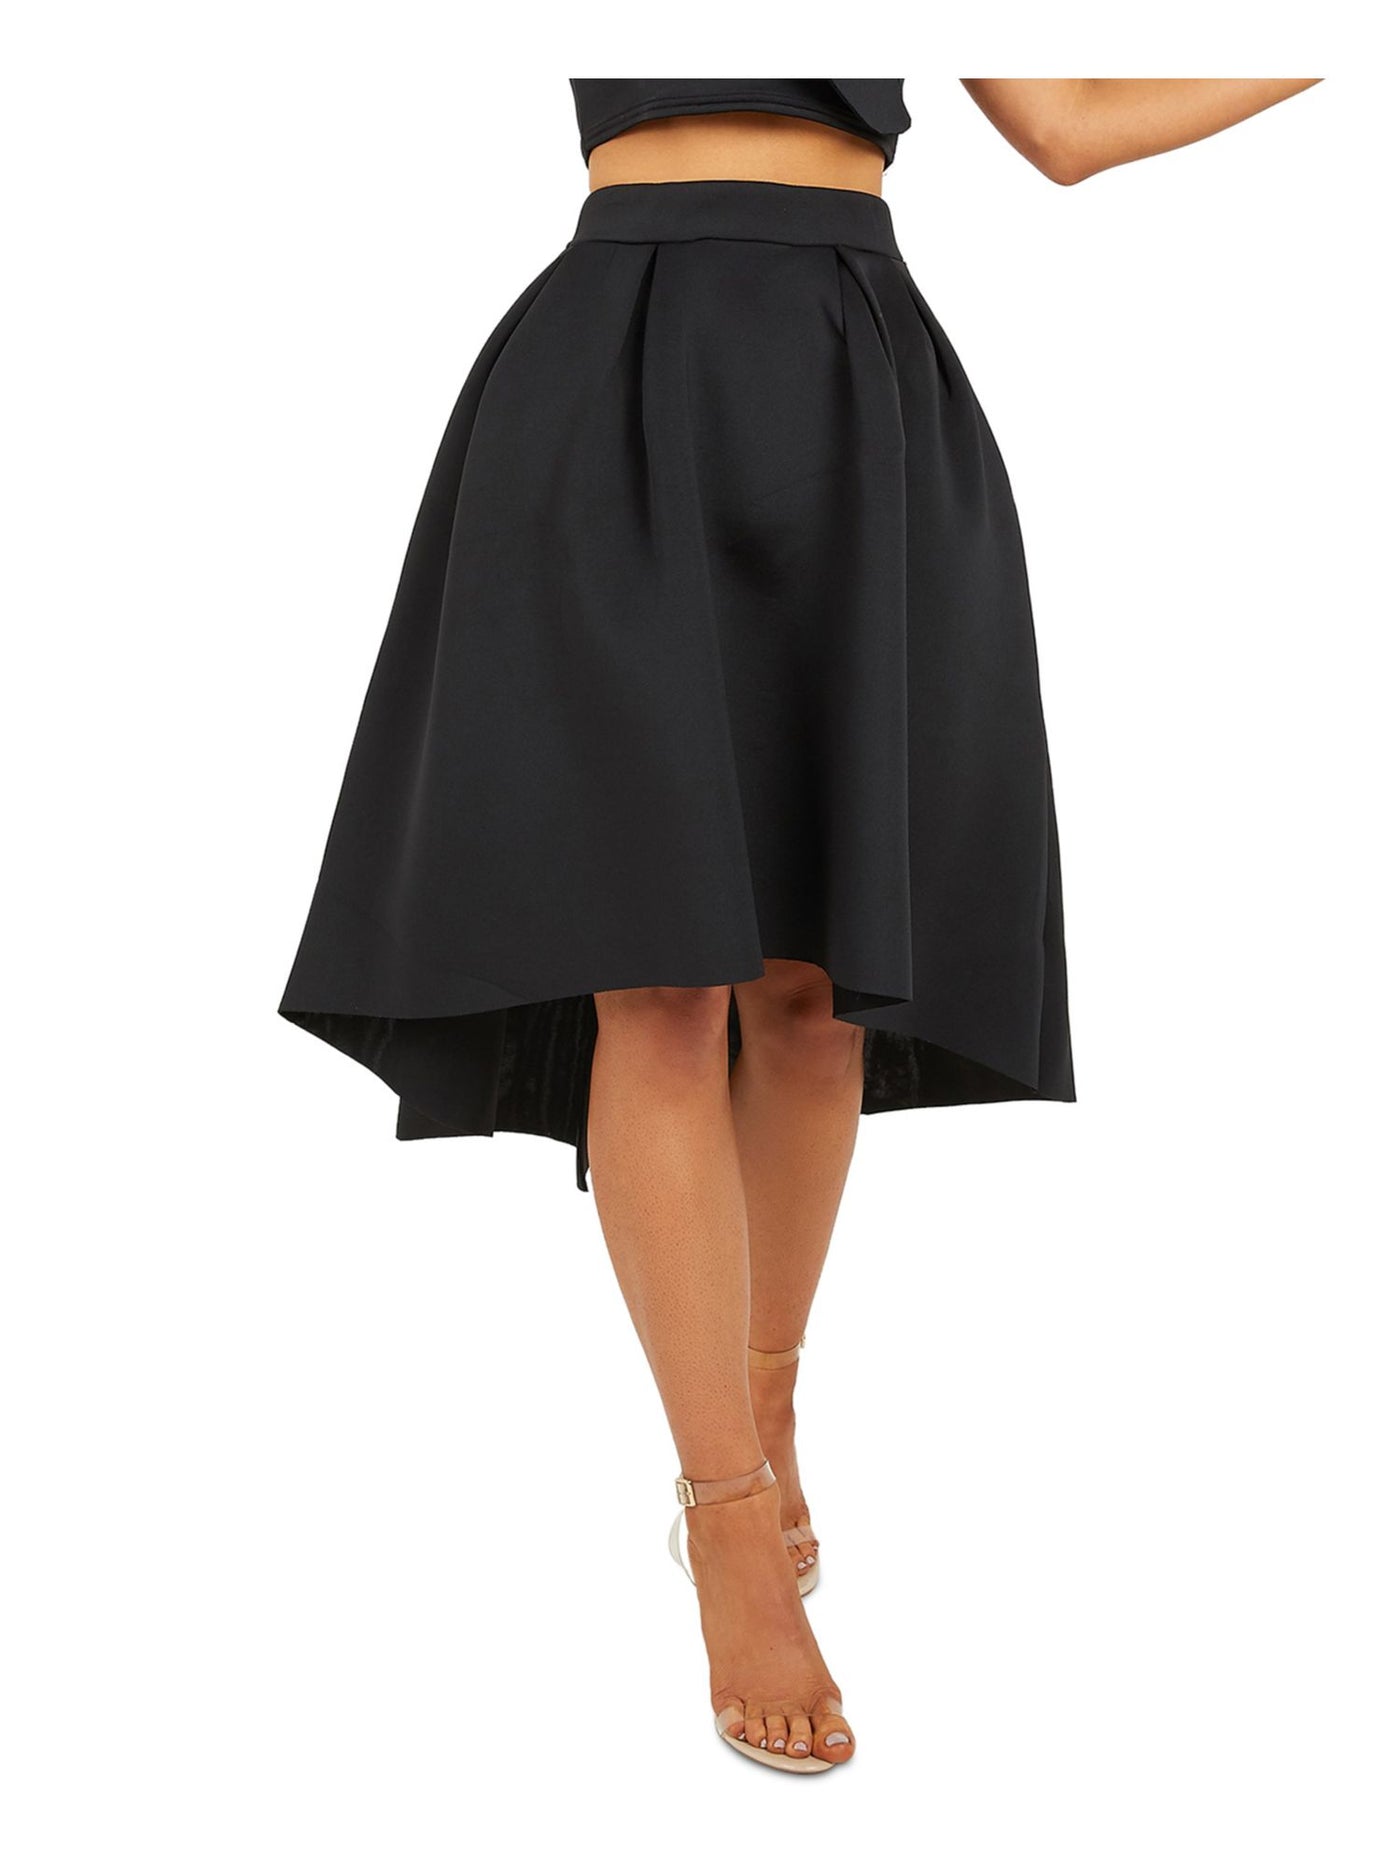 QUIZ Womens Black Knee Length Evening Hi-Lo Skirt 6